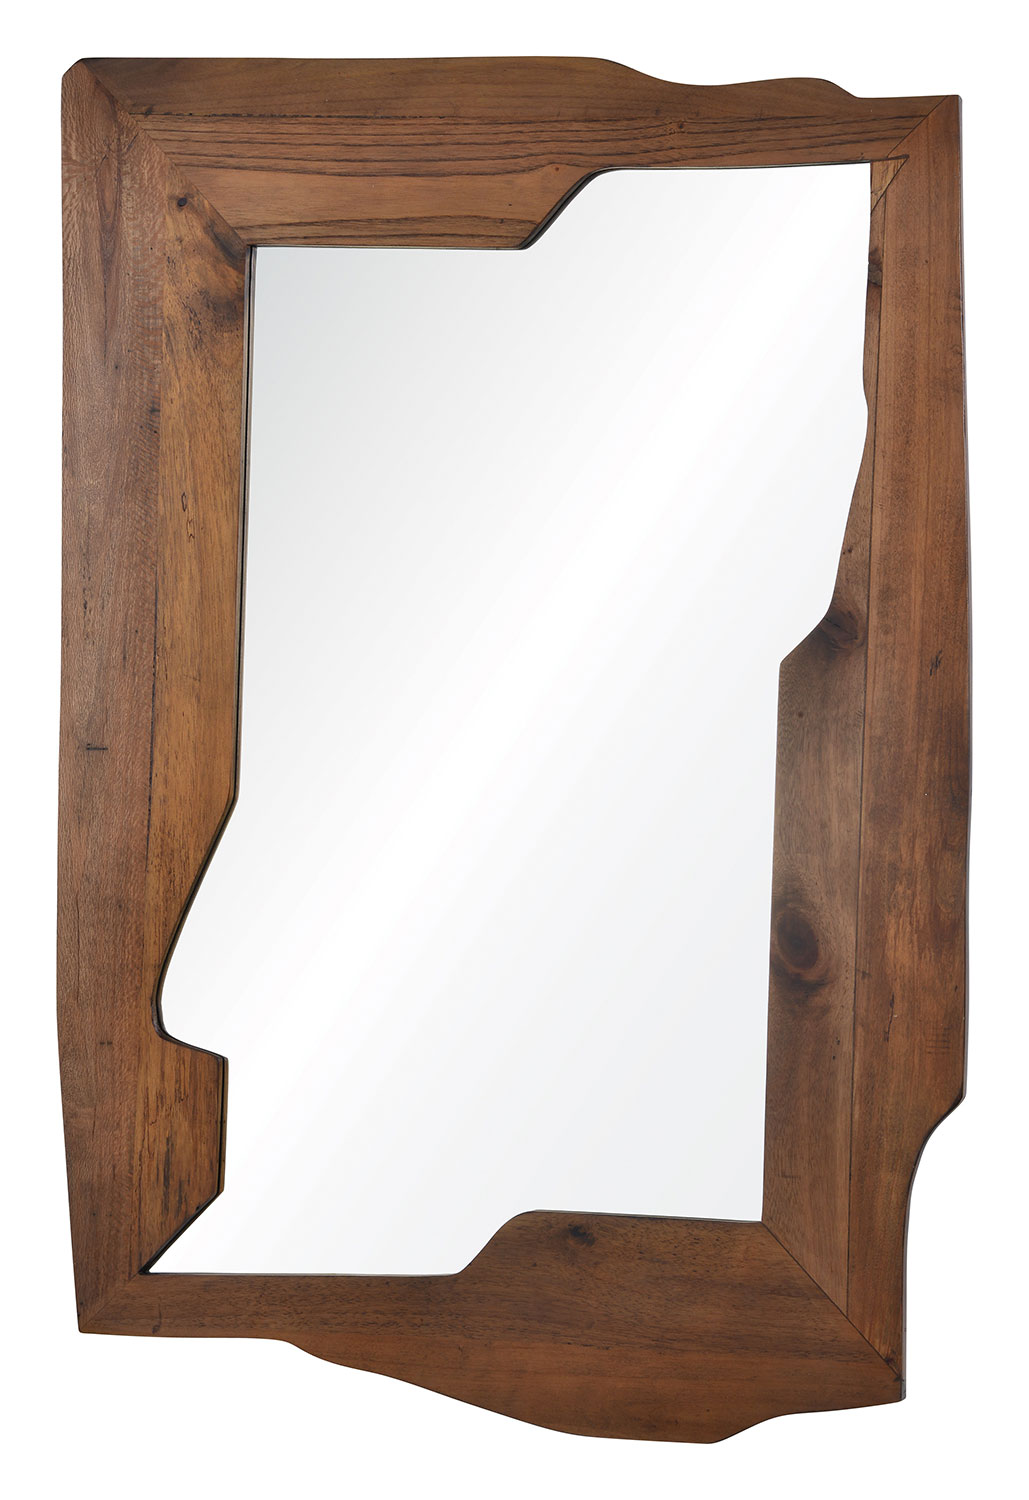 Cooper Classics Gunderson Mirror - Natural Wood